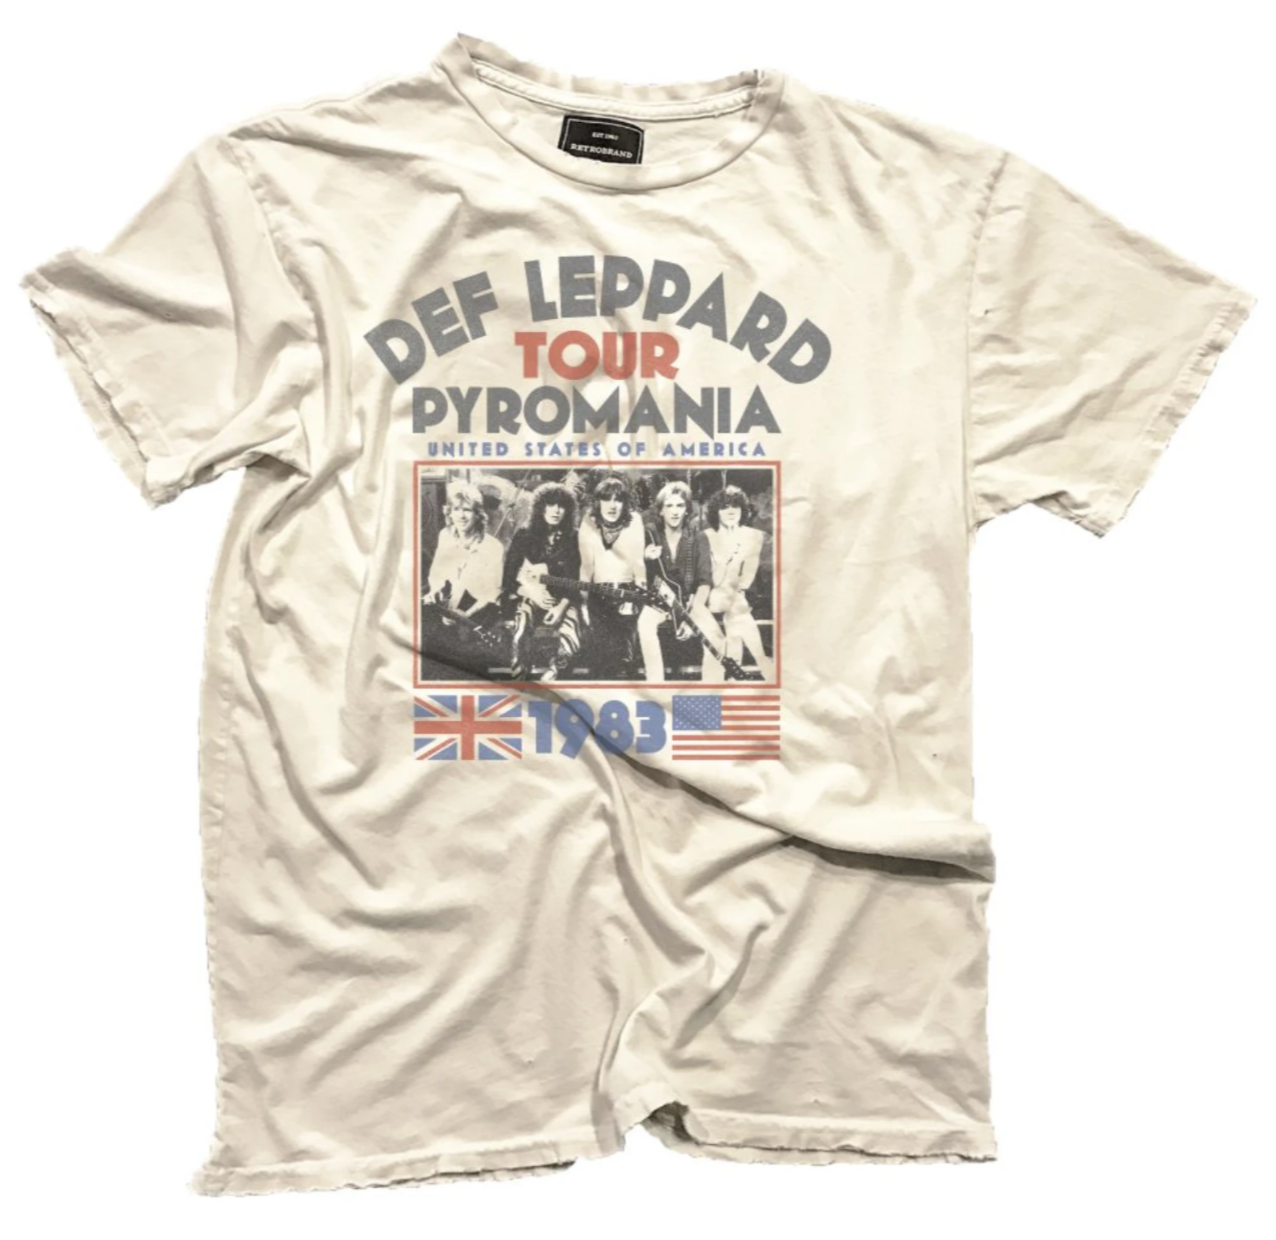 Def Leppard Pyromania Tour Black Label Tee